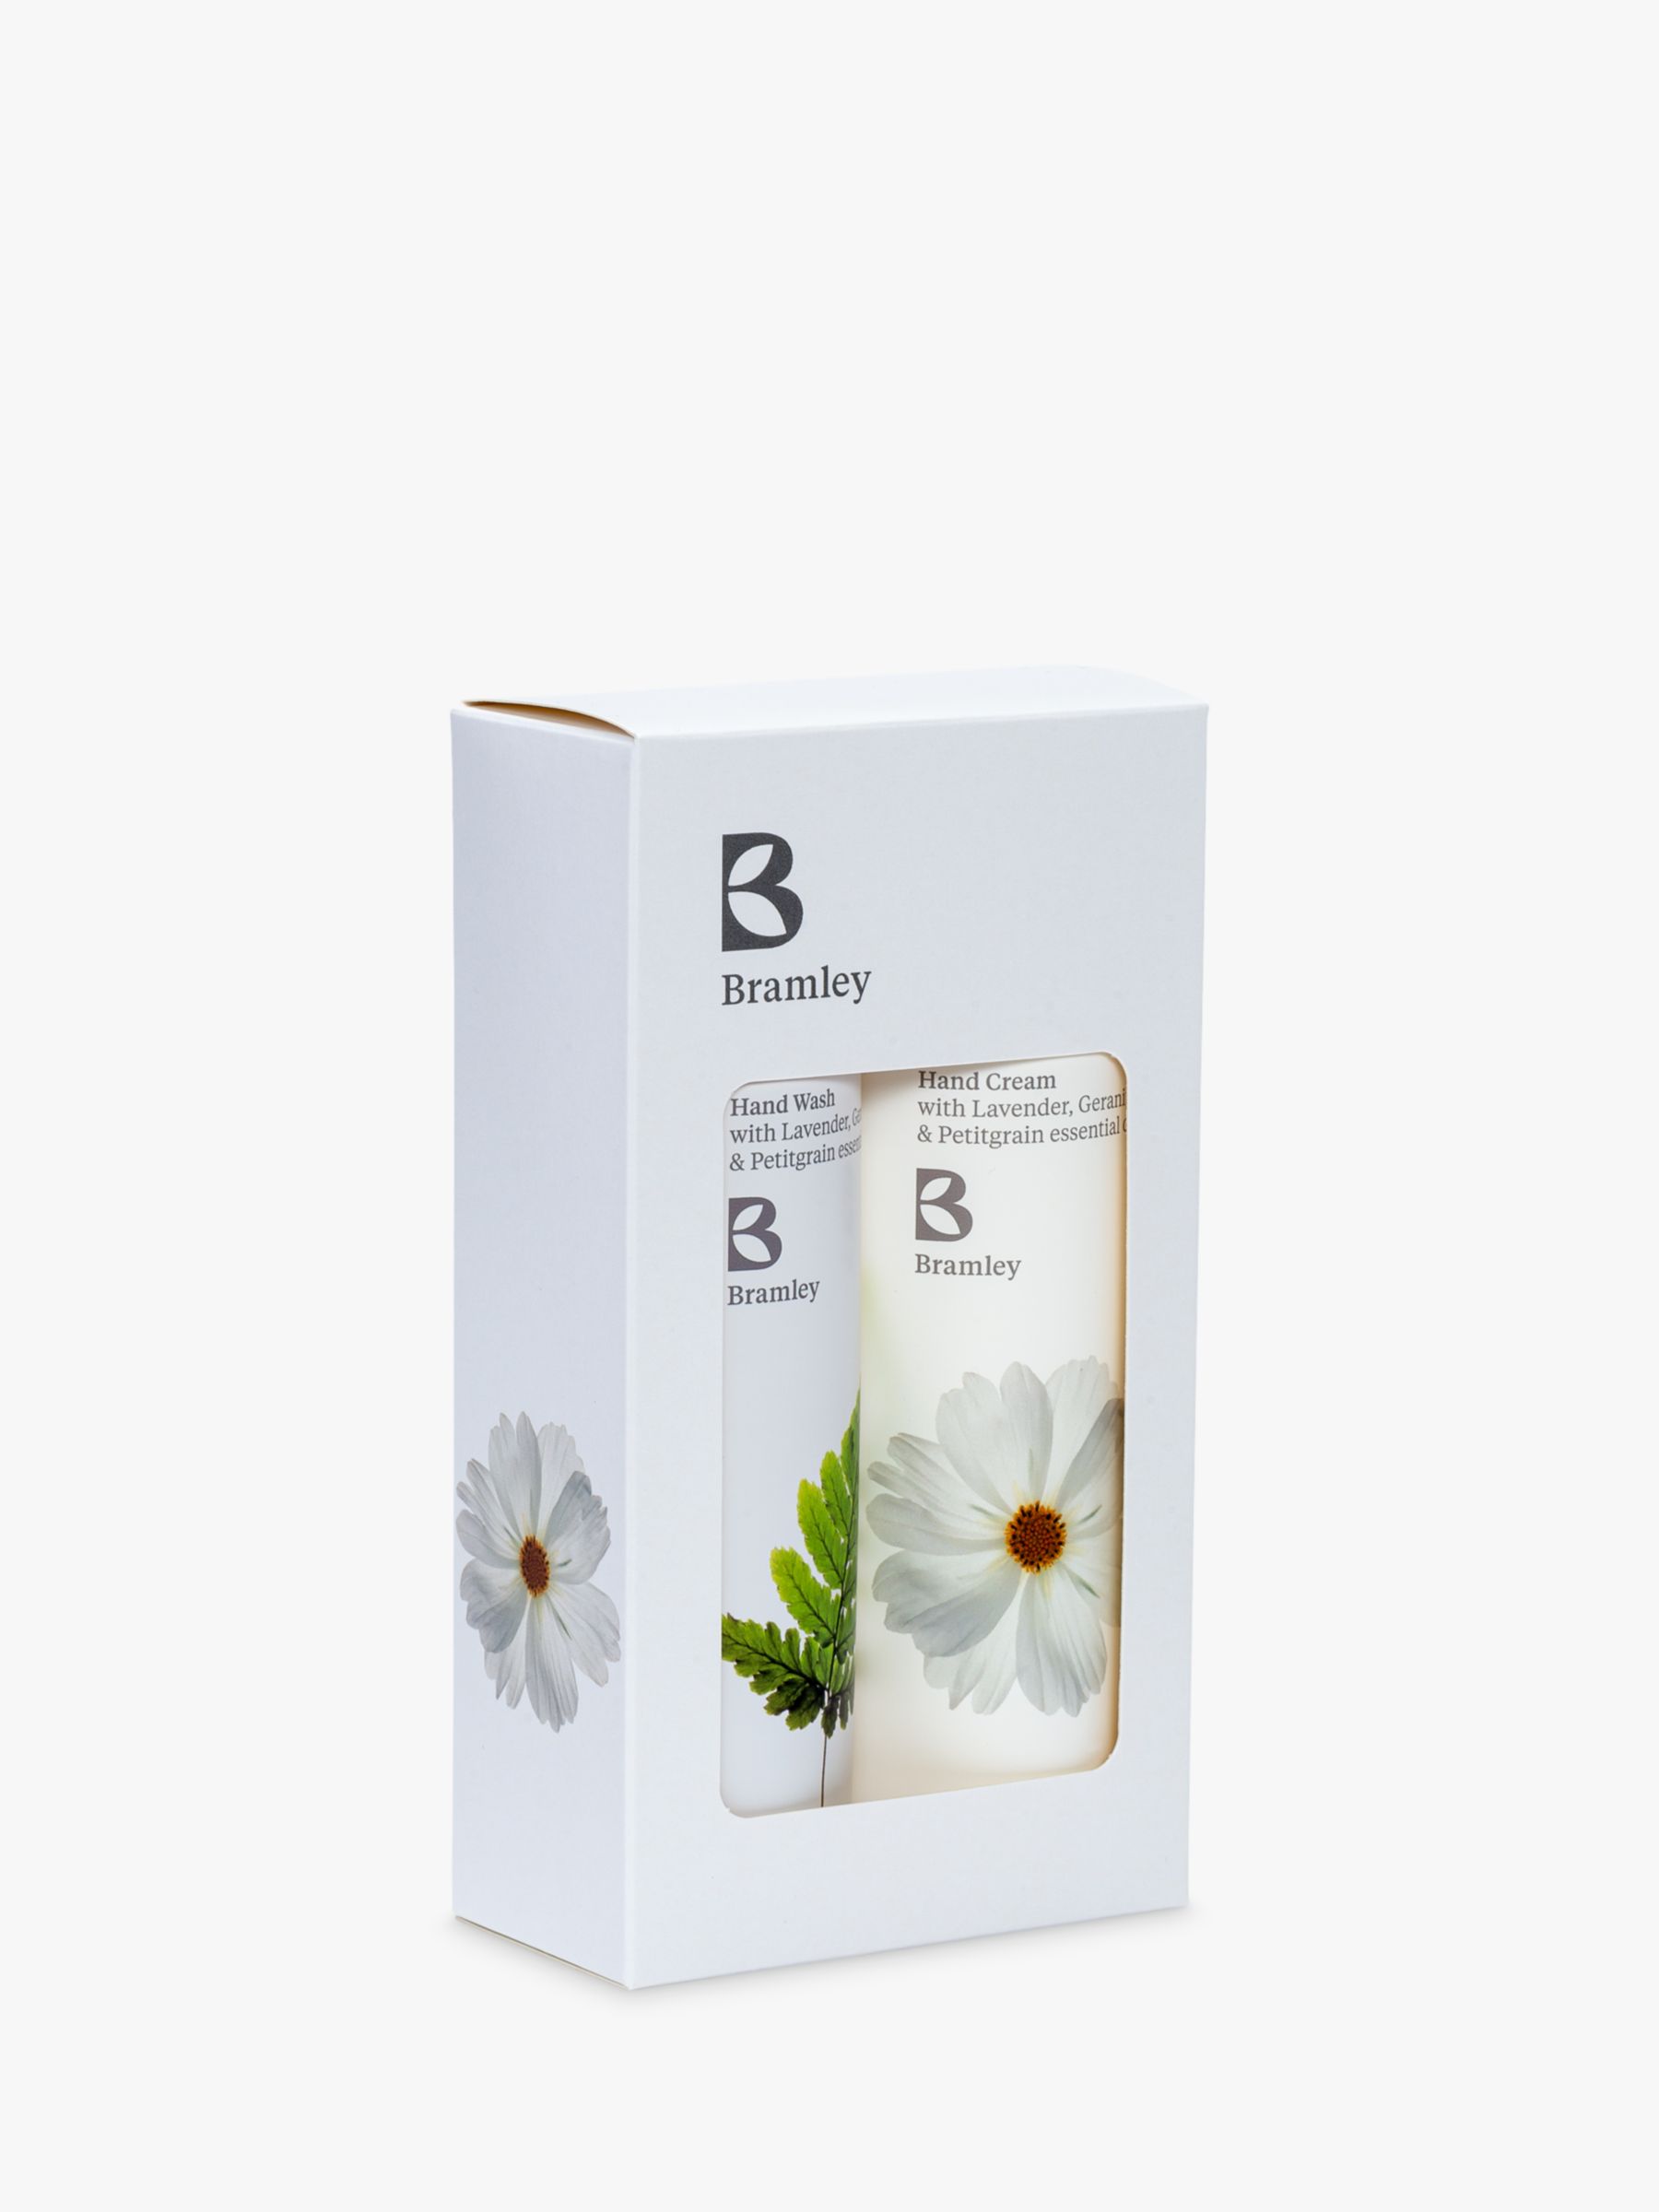 Bramley Ivy Lavender, Geranium & Petitgrain Hand Care Gift Set, 250ml each